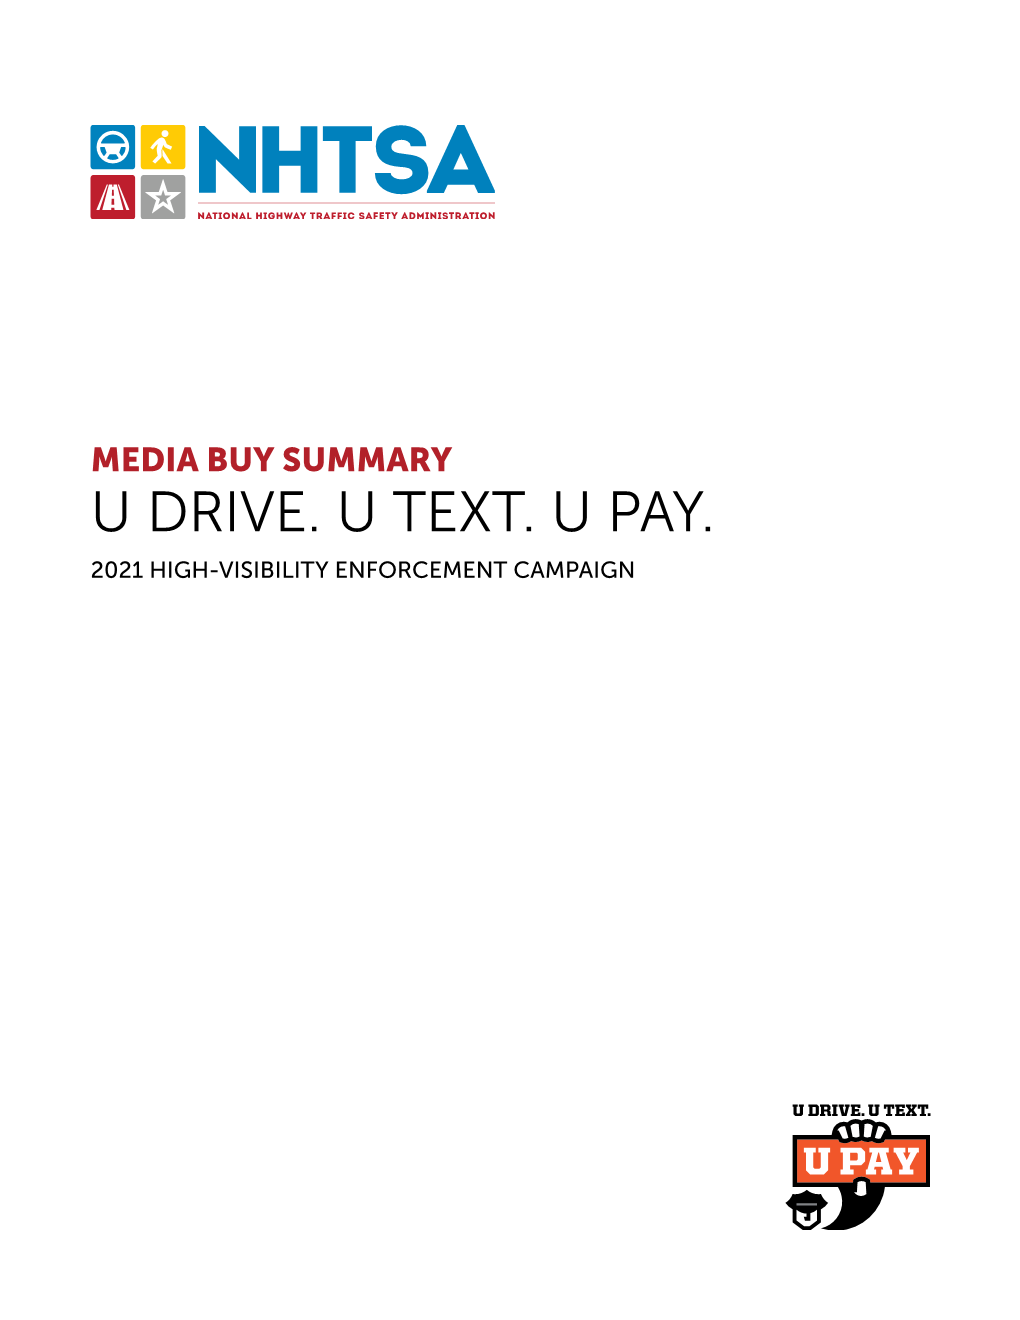 2021 U Drive. U Text. U Pay. HVE Media Buy Summary